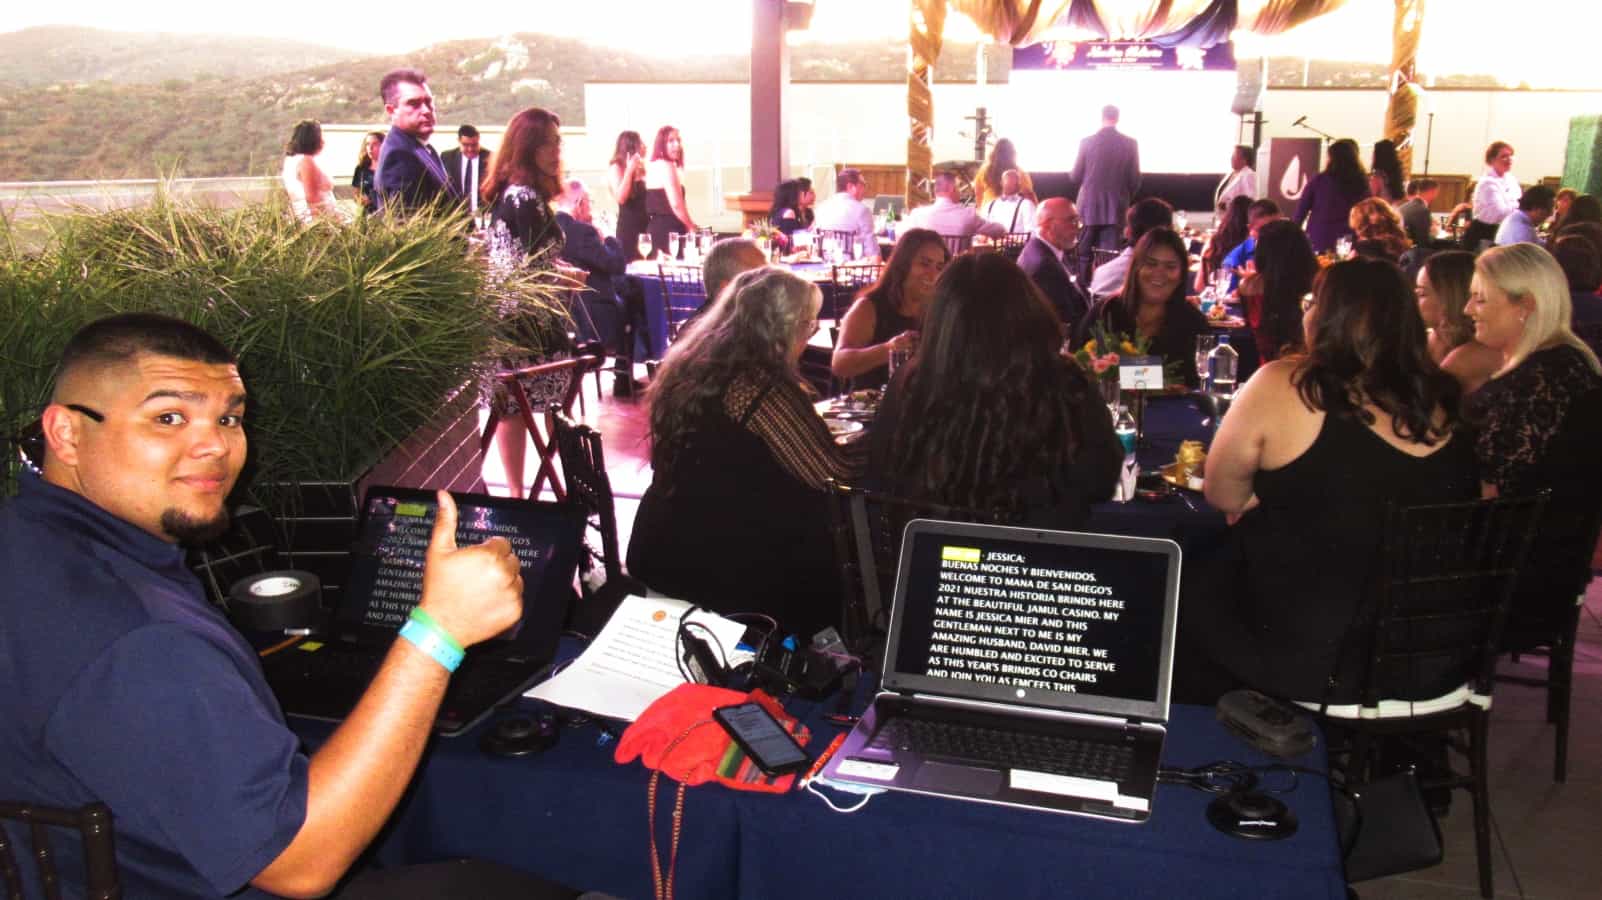 John Lacuesta presidential teleprompting at Mana de San Diego